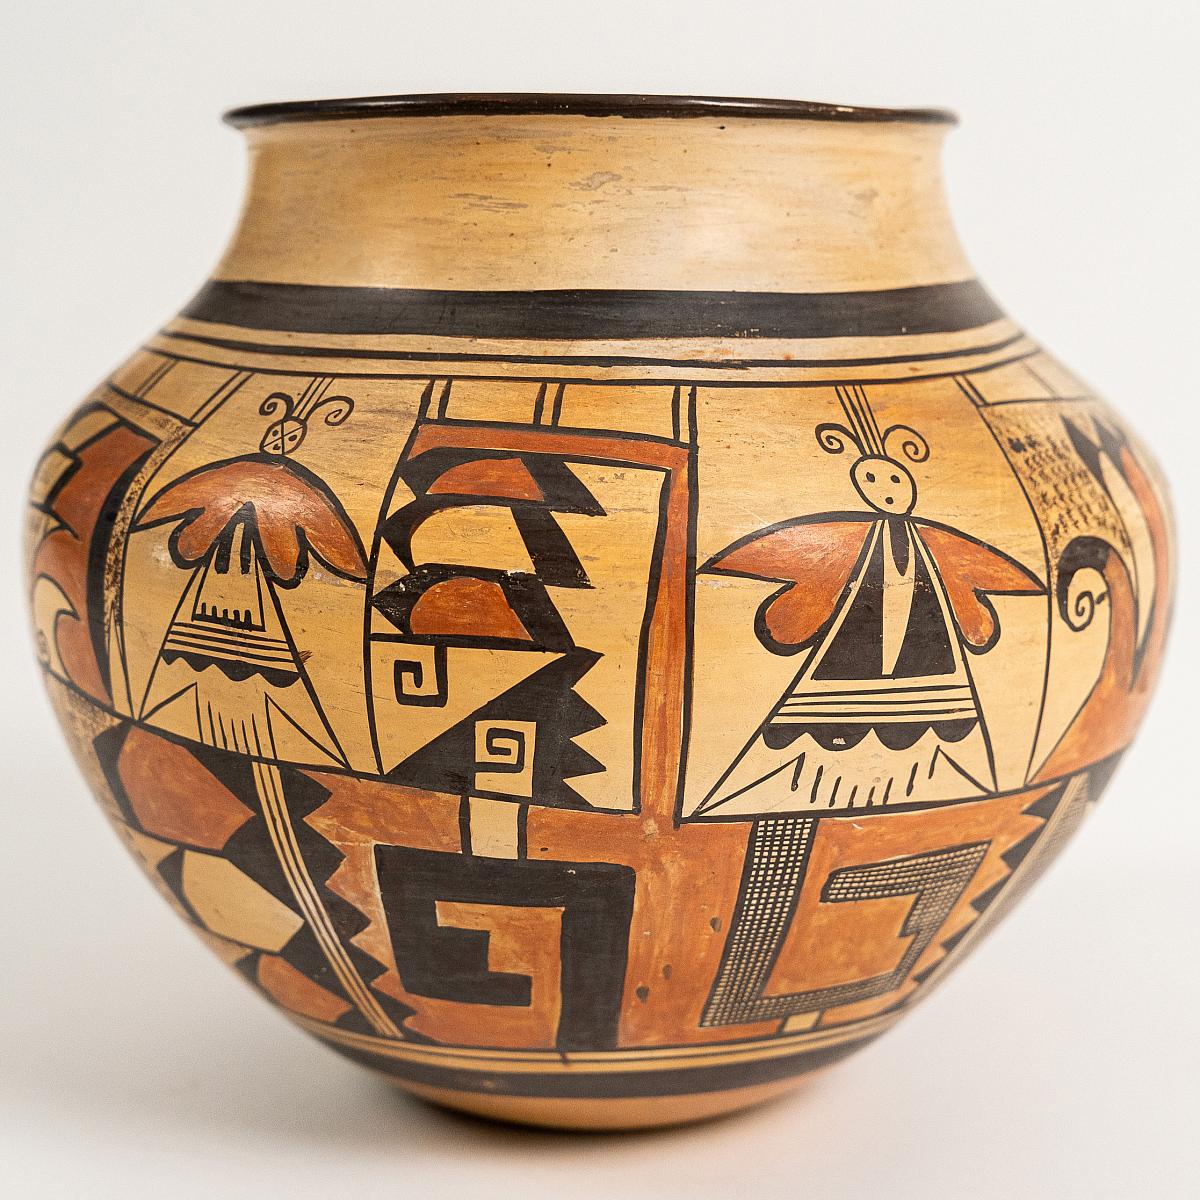 Hopi butterfly pot depicting butterflies, Hopi parrots, and other stylized motifs